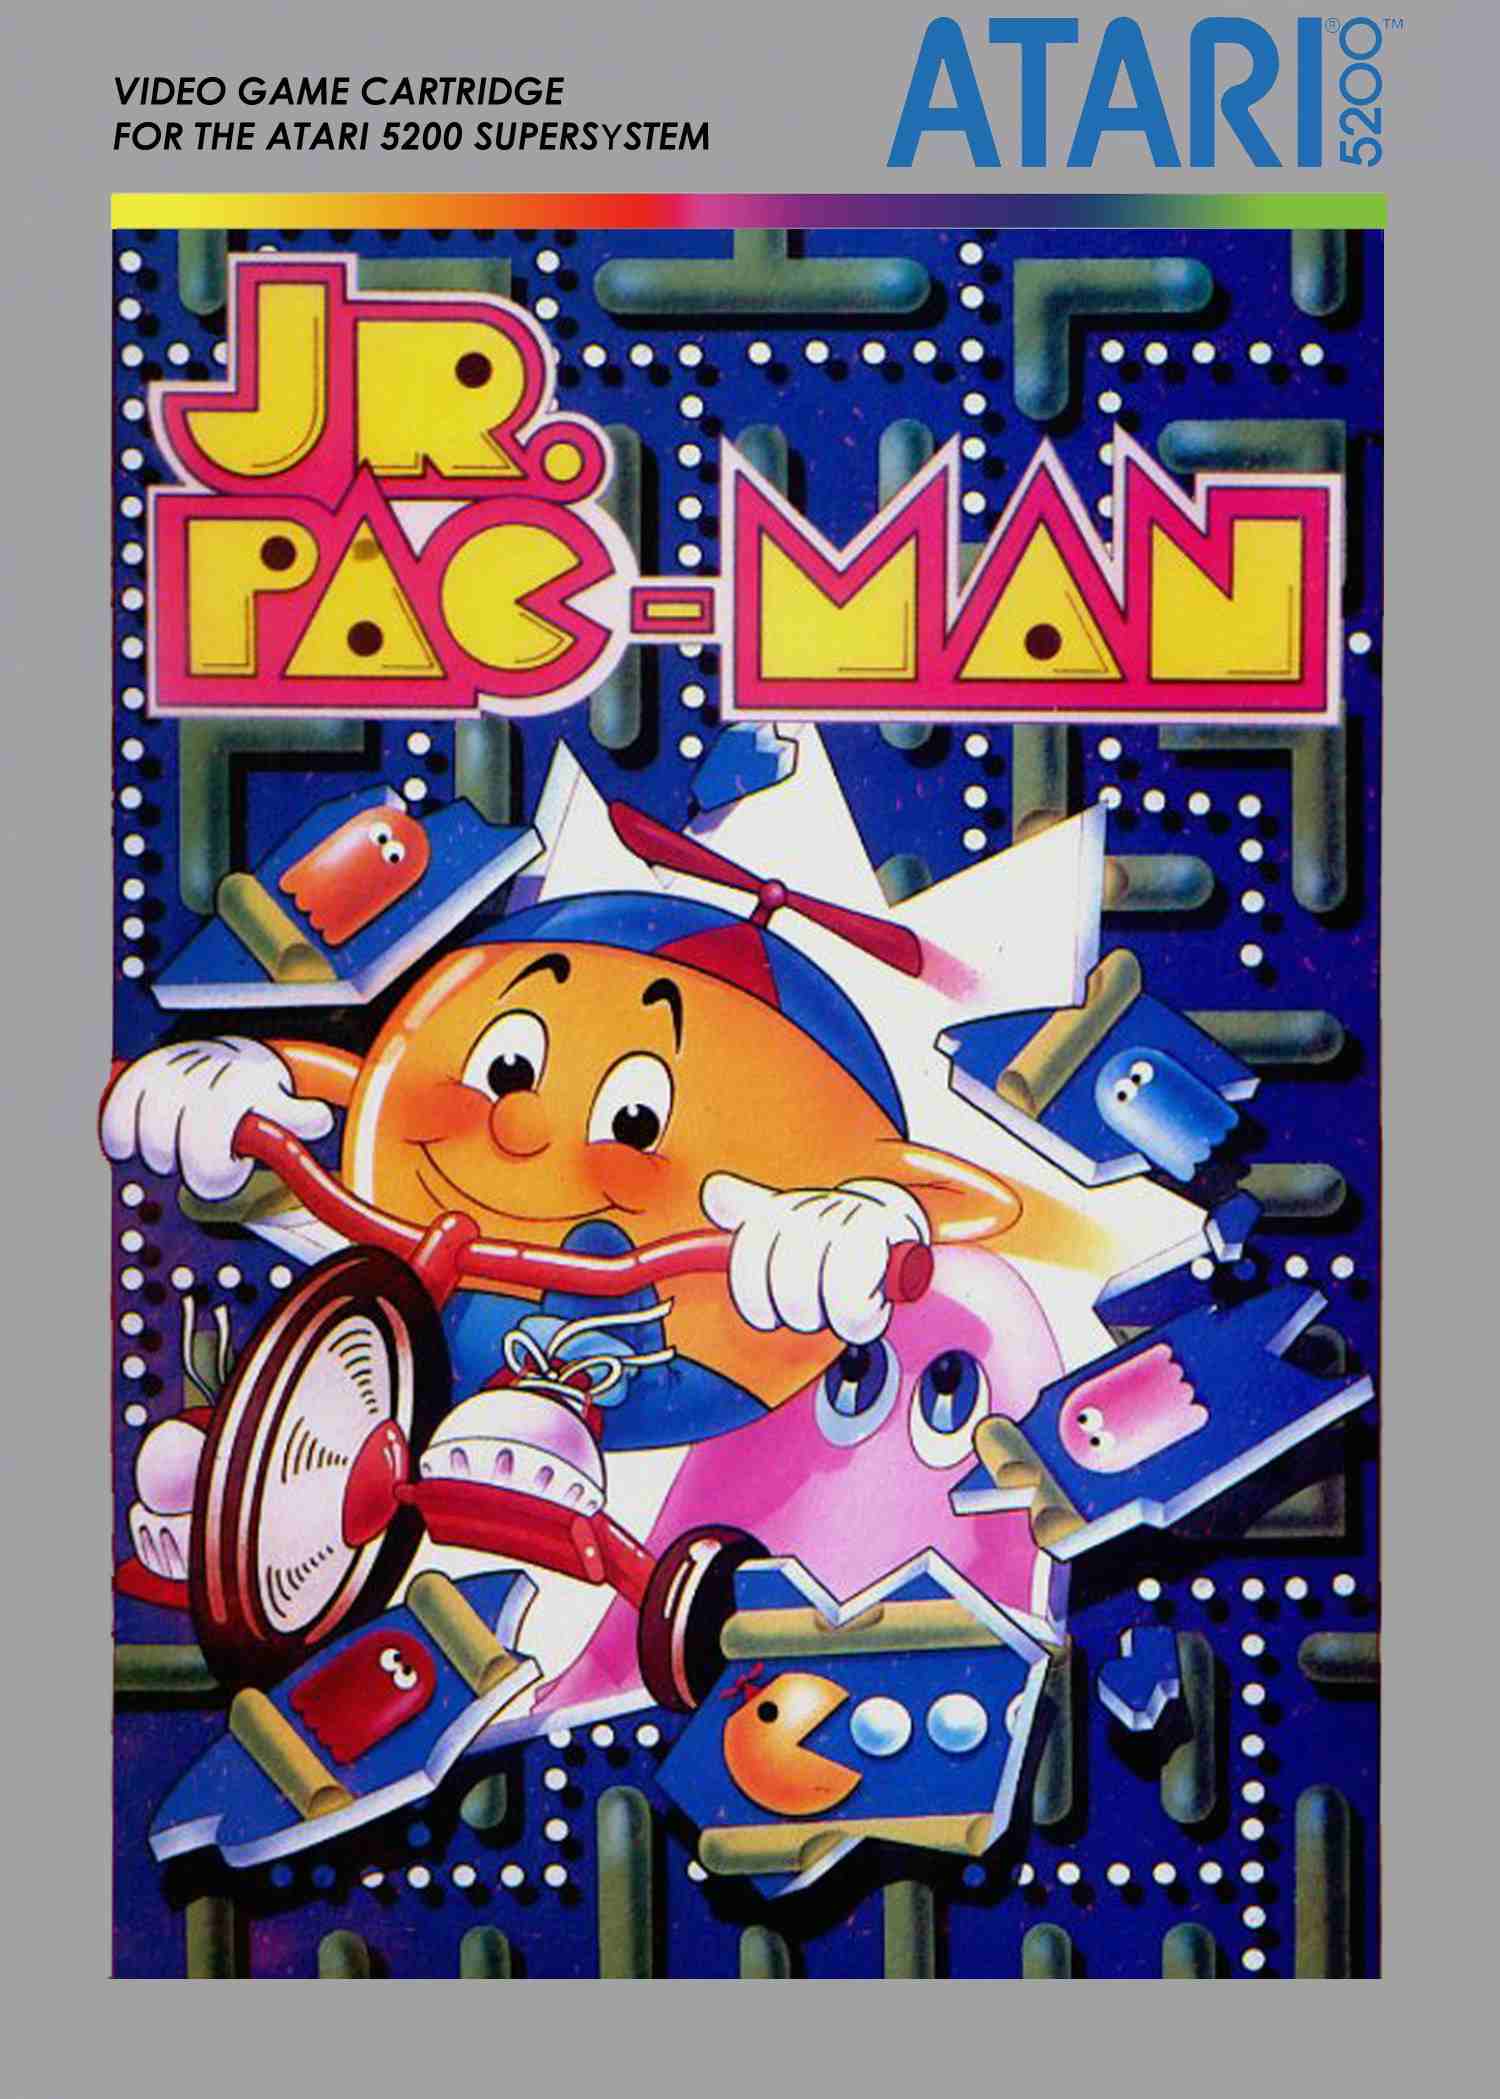 Jr. Pac-Man player count stats